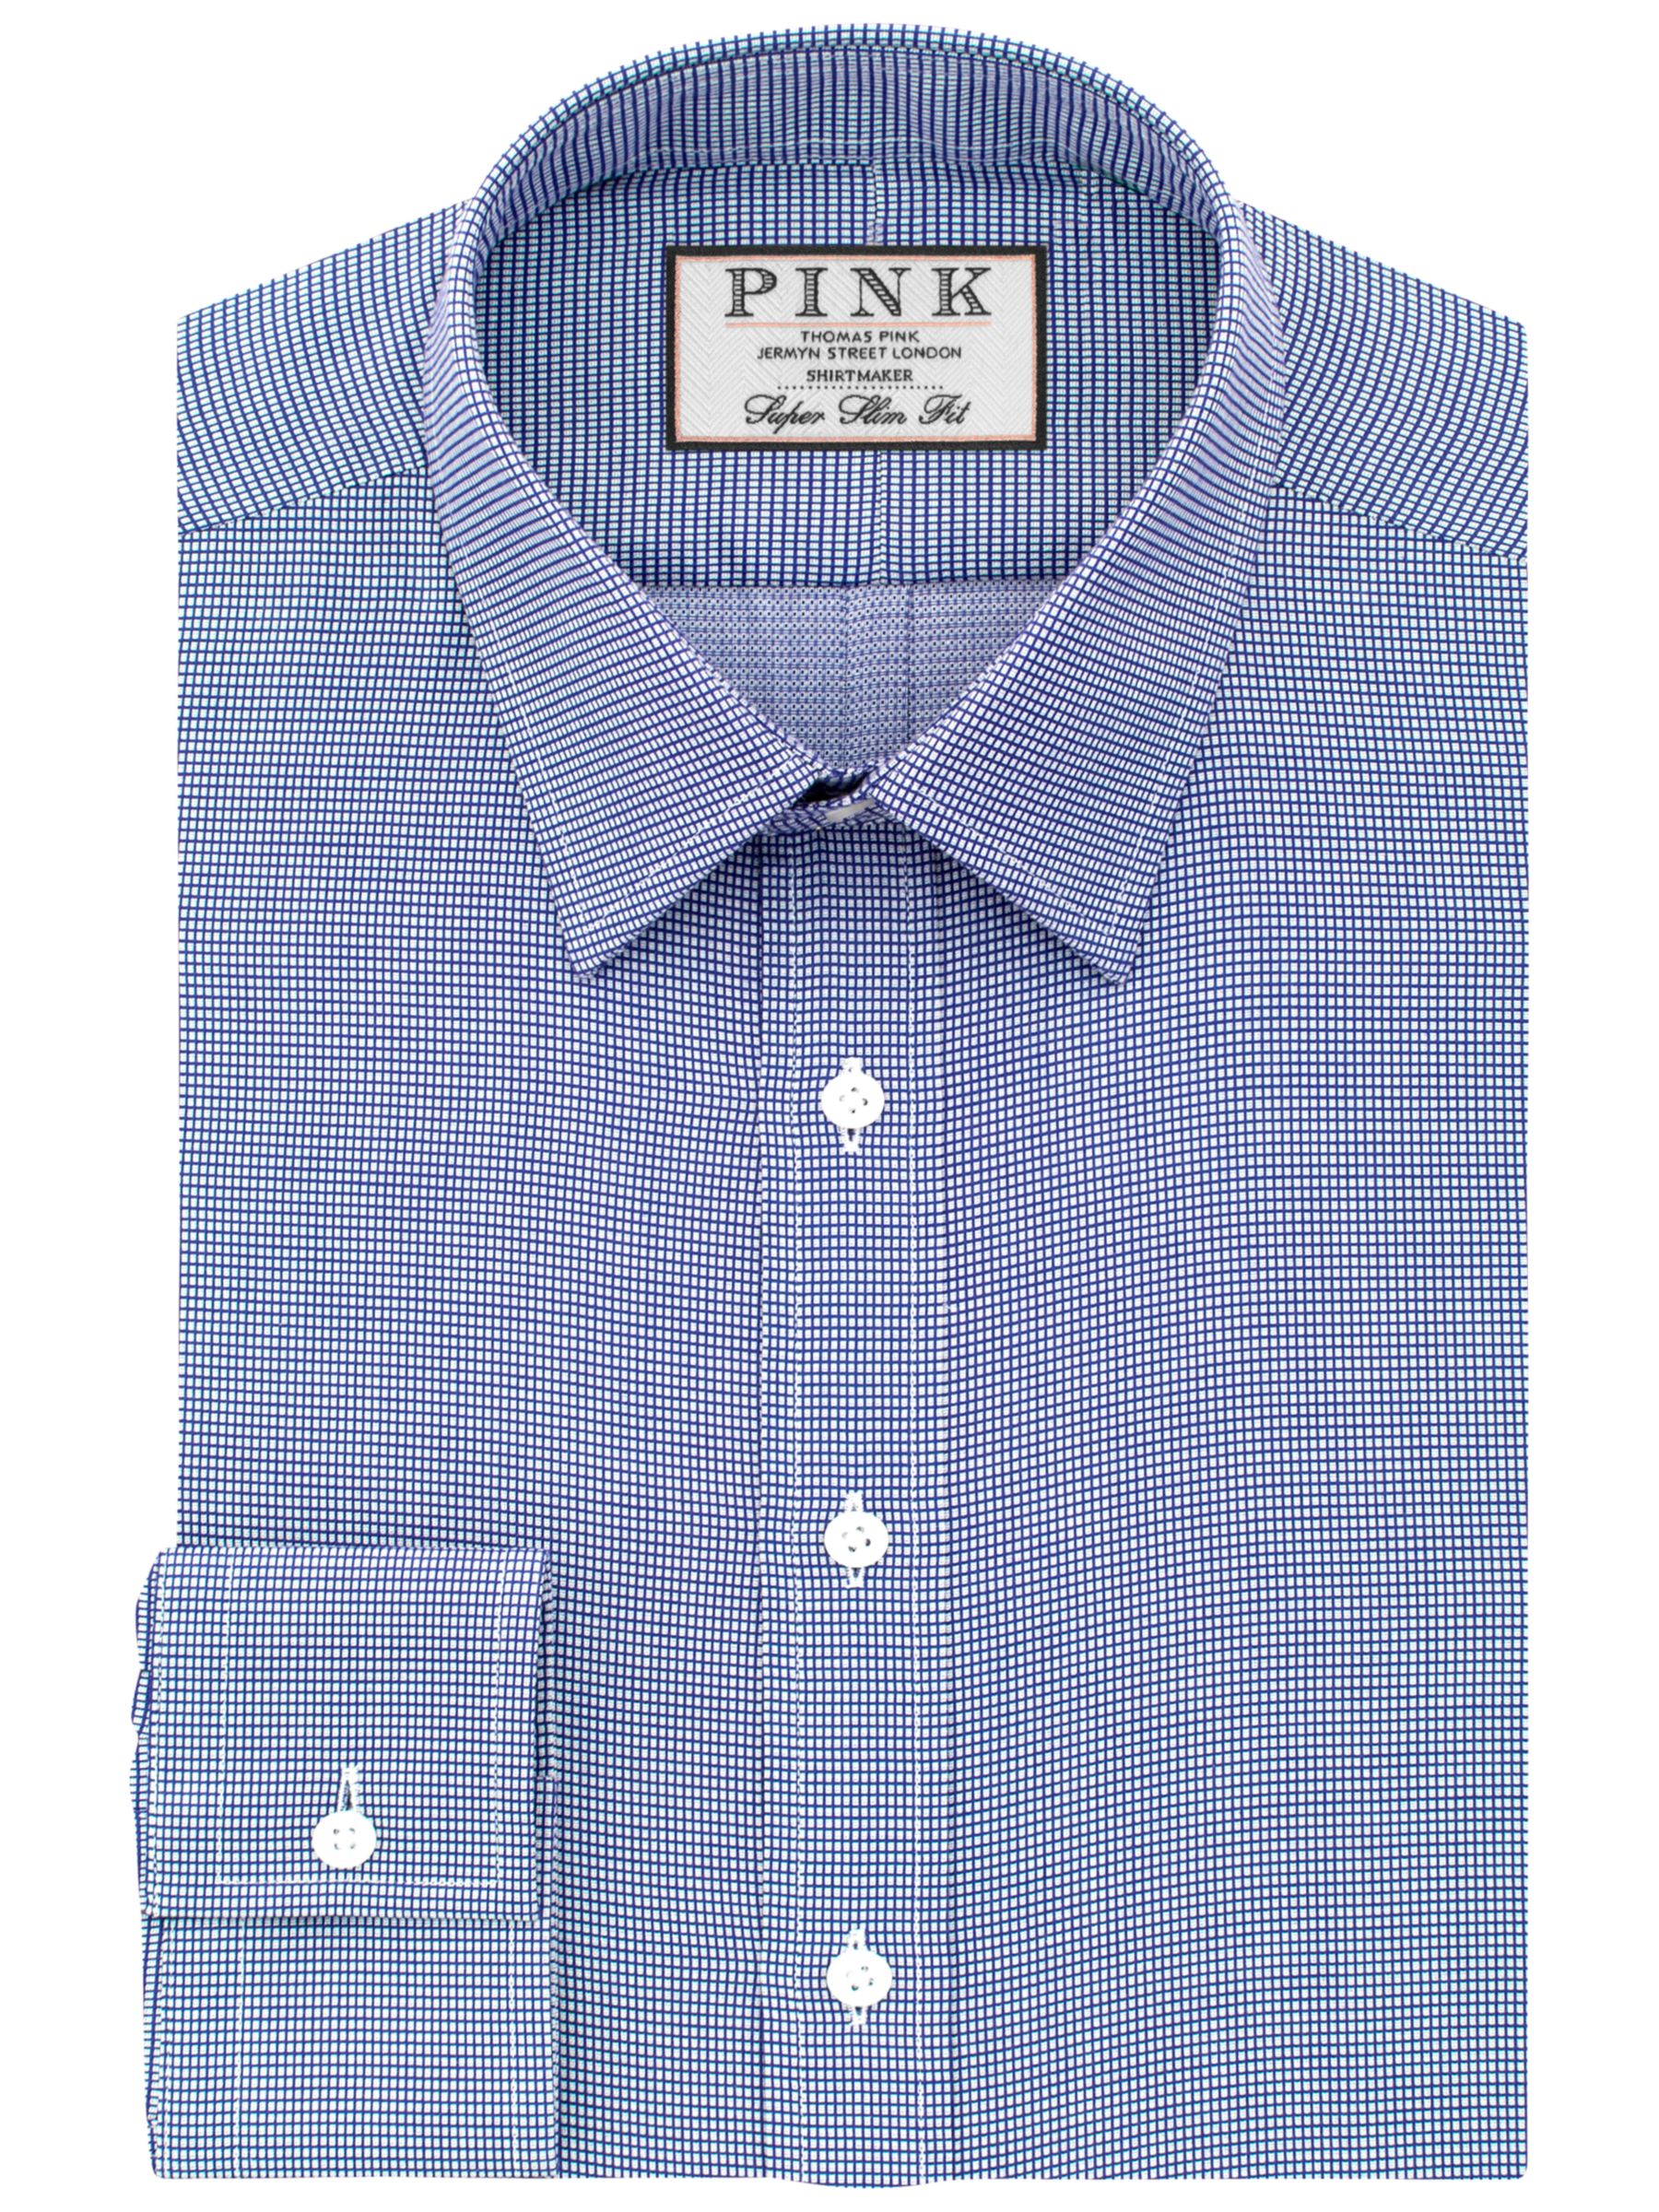 Thomas Pink Hartley Textured Super Slim Fit Shirt, Blue/White, 14.5